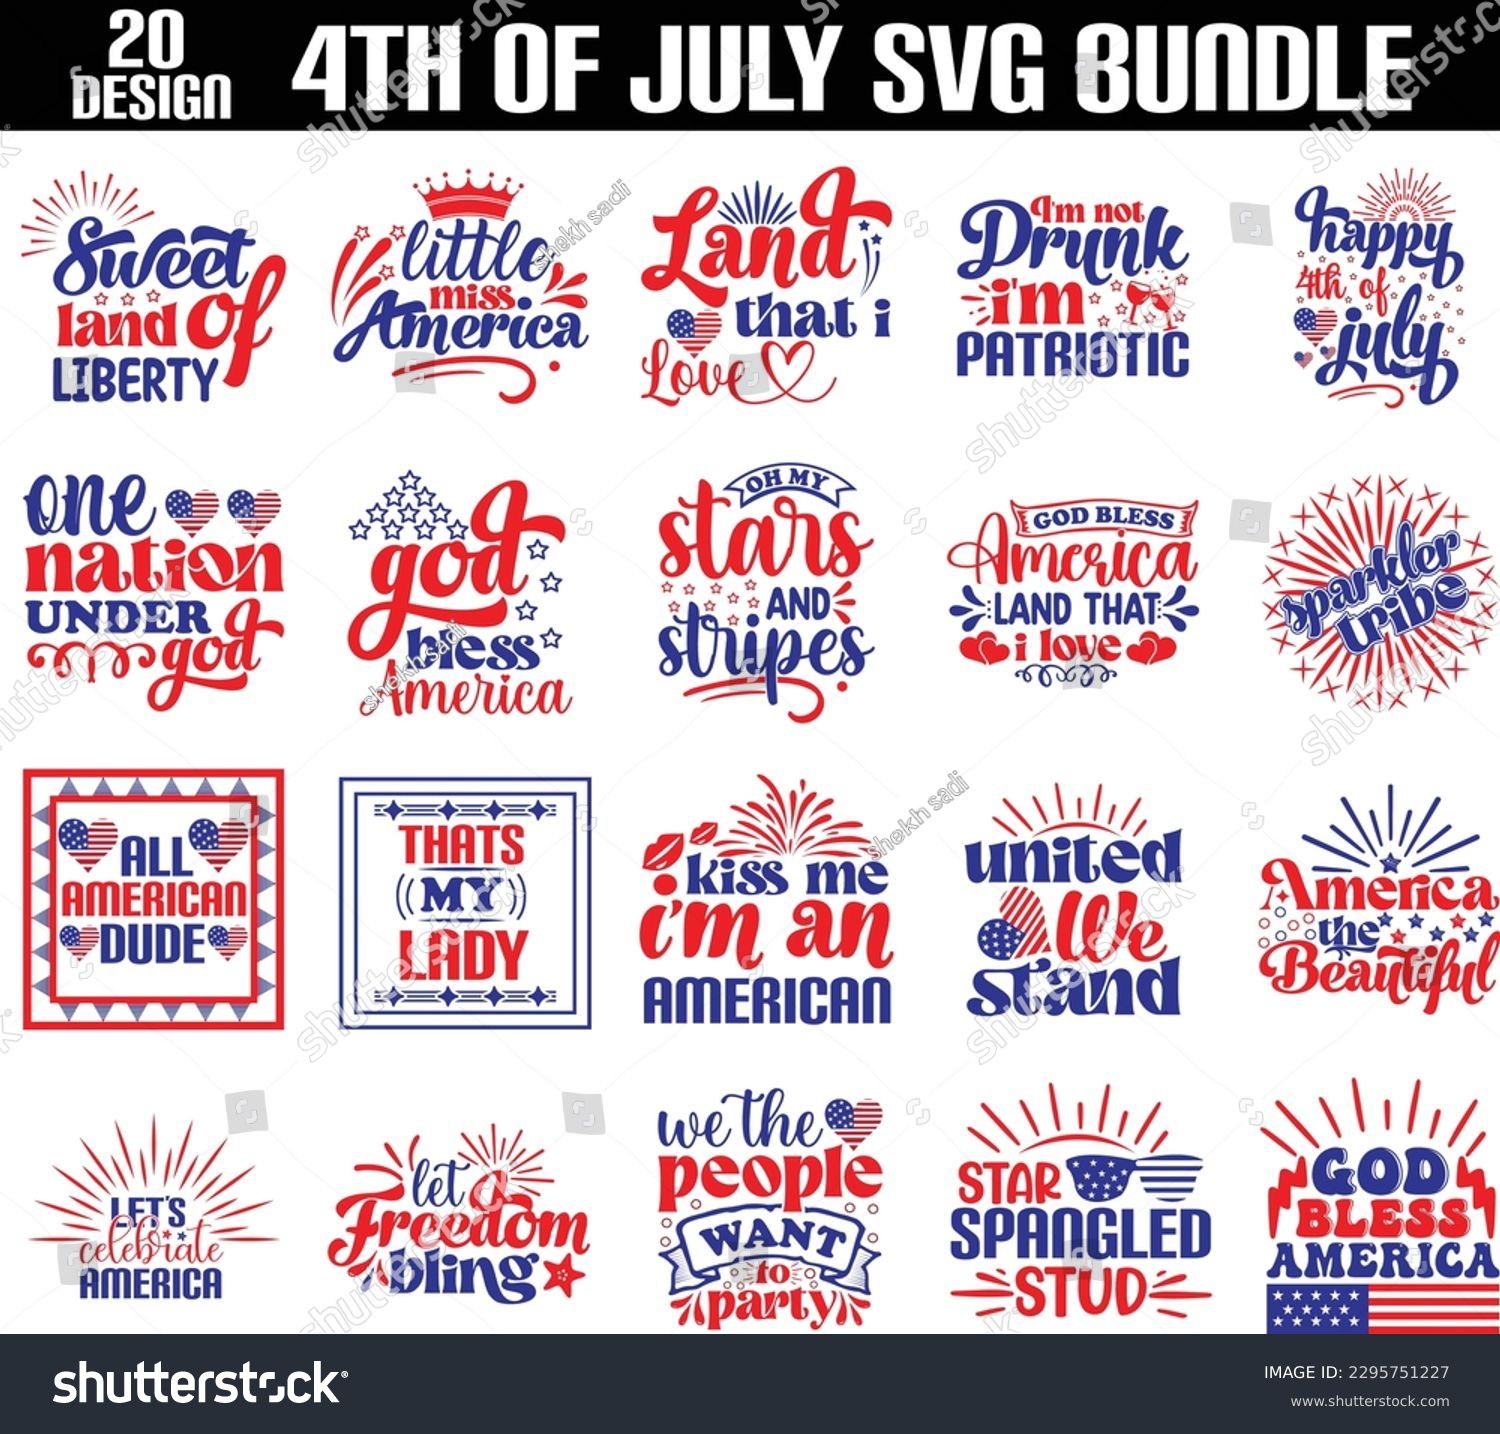 SVG of American independence day svg bundle
American independence day svg bundle svg